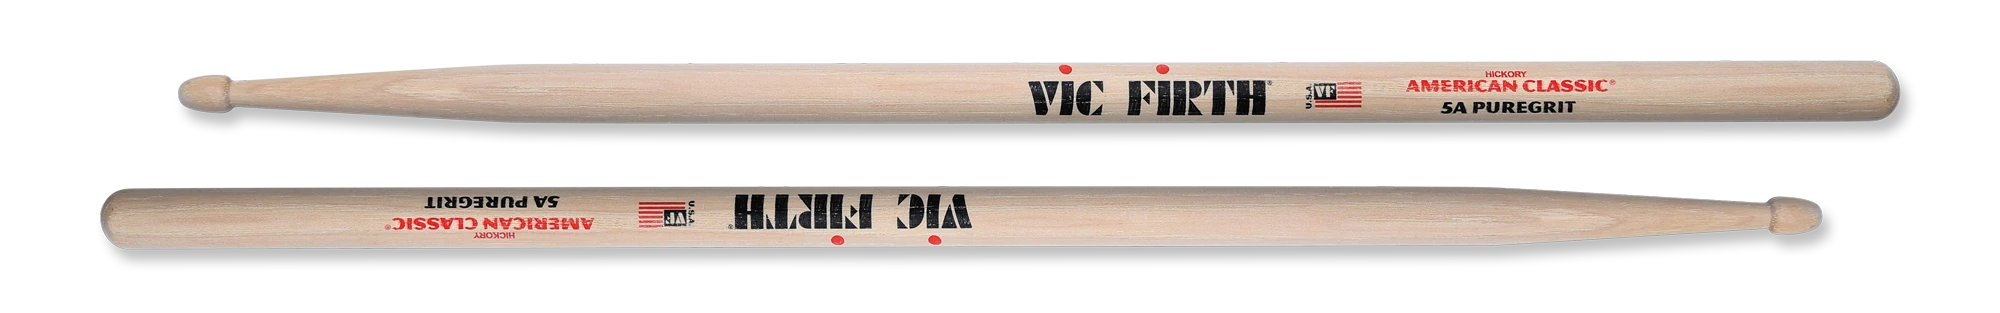 Vic Firth Holzkopf 5A Puregrit Sticks